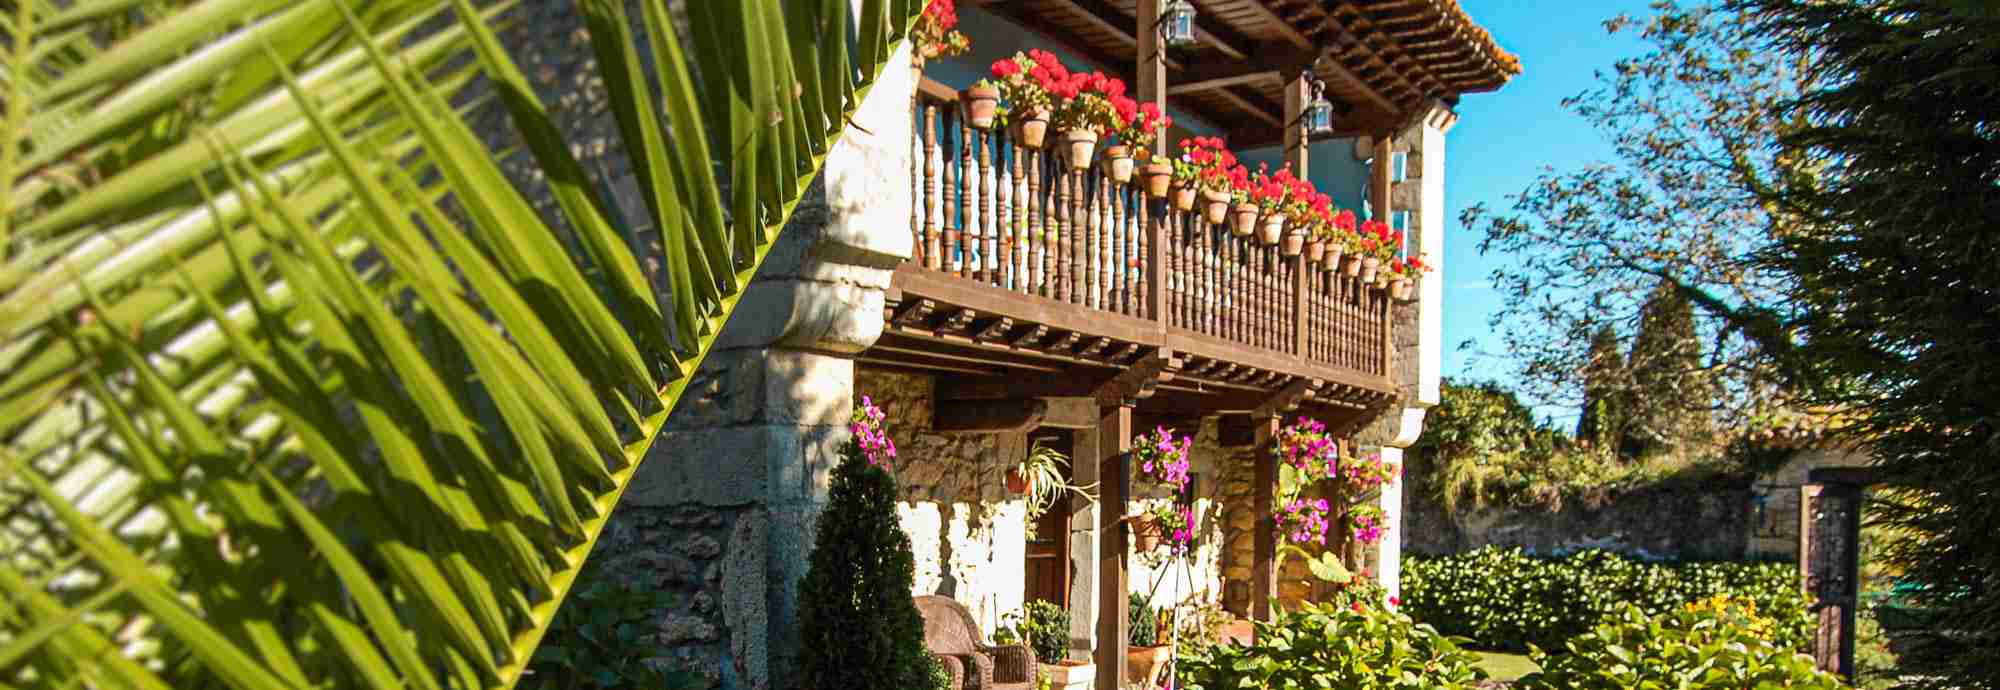 Casa asturiana ideal en precioso entorno de montaña a 7 minutos del mar